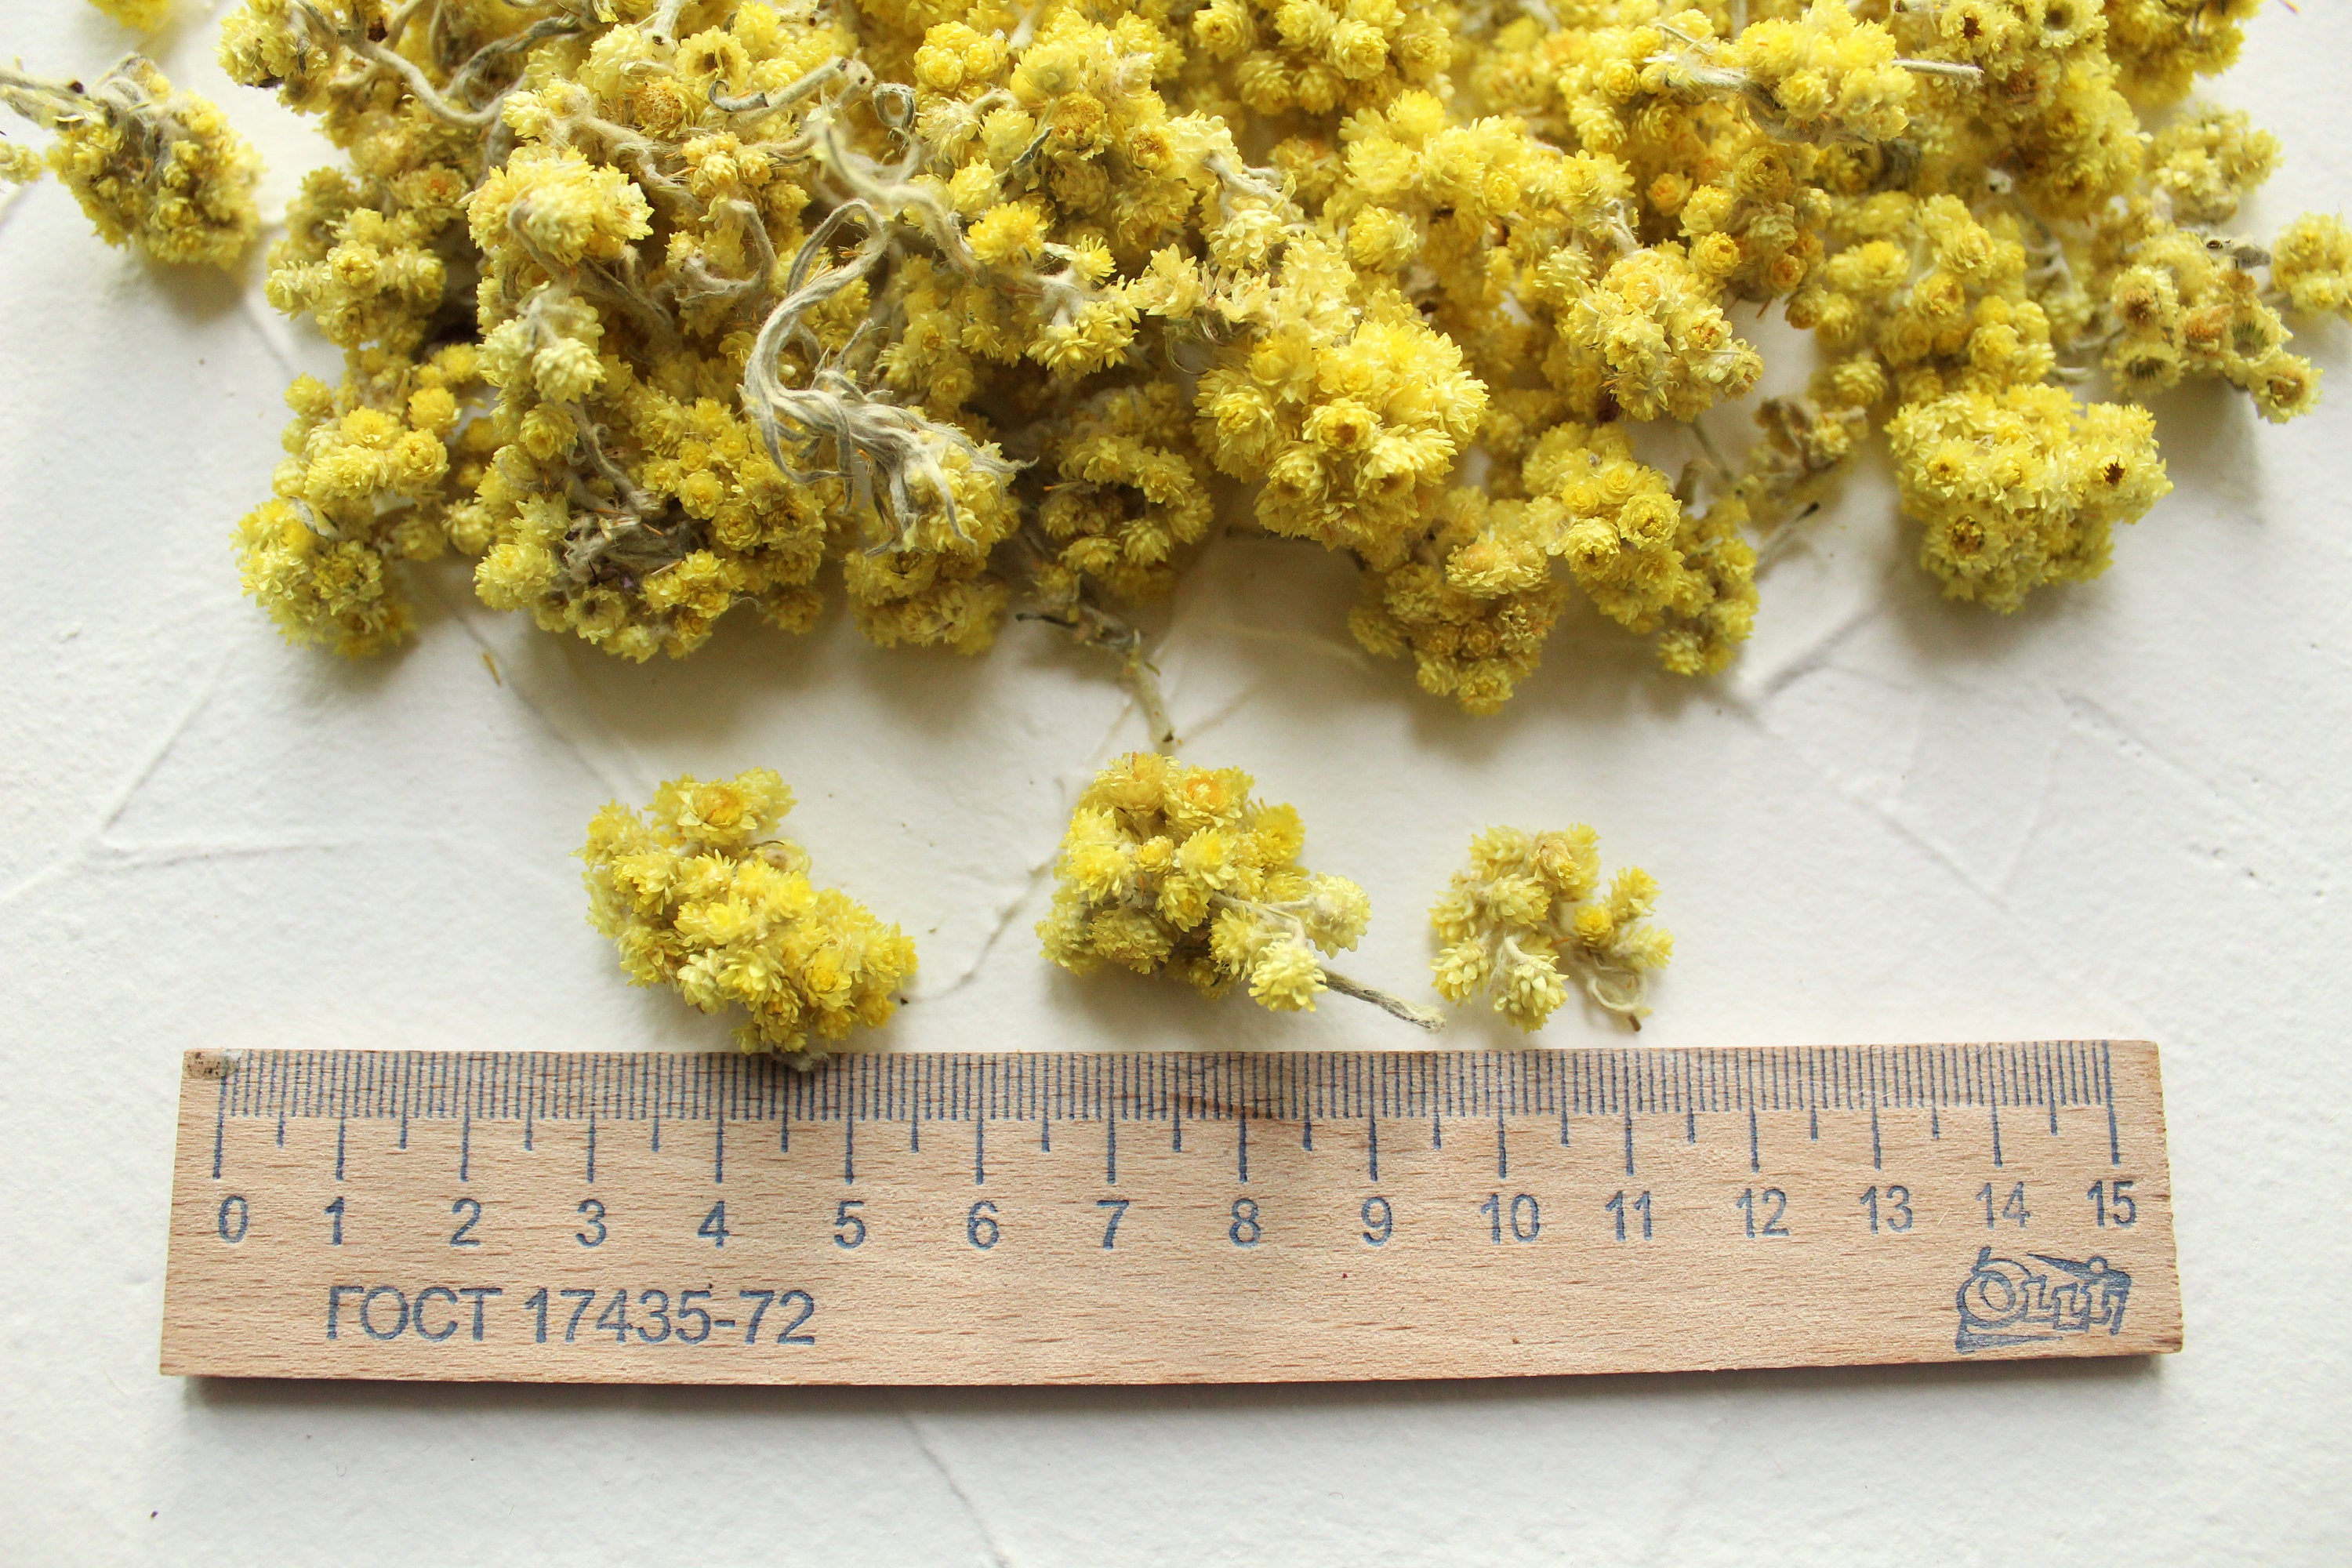 250 grams of Helichrysum flowers, Helichrysum, High Quality, Natural, Wild grow, Organic, Biodegraddable, Wedding, Craft, Edible, Confetti